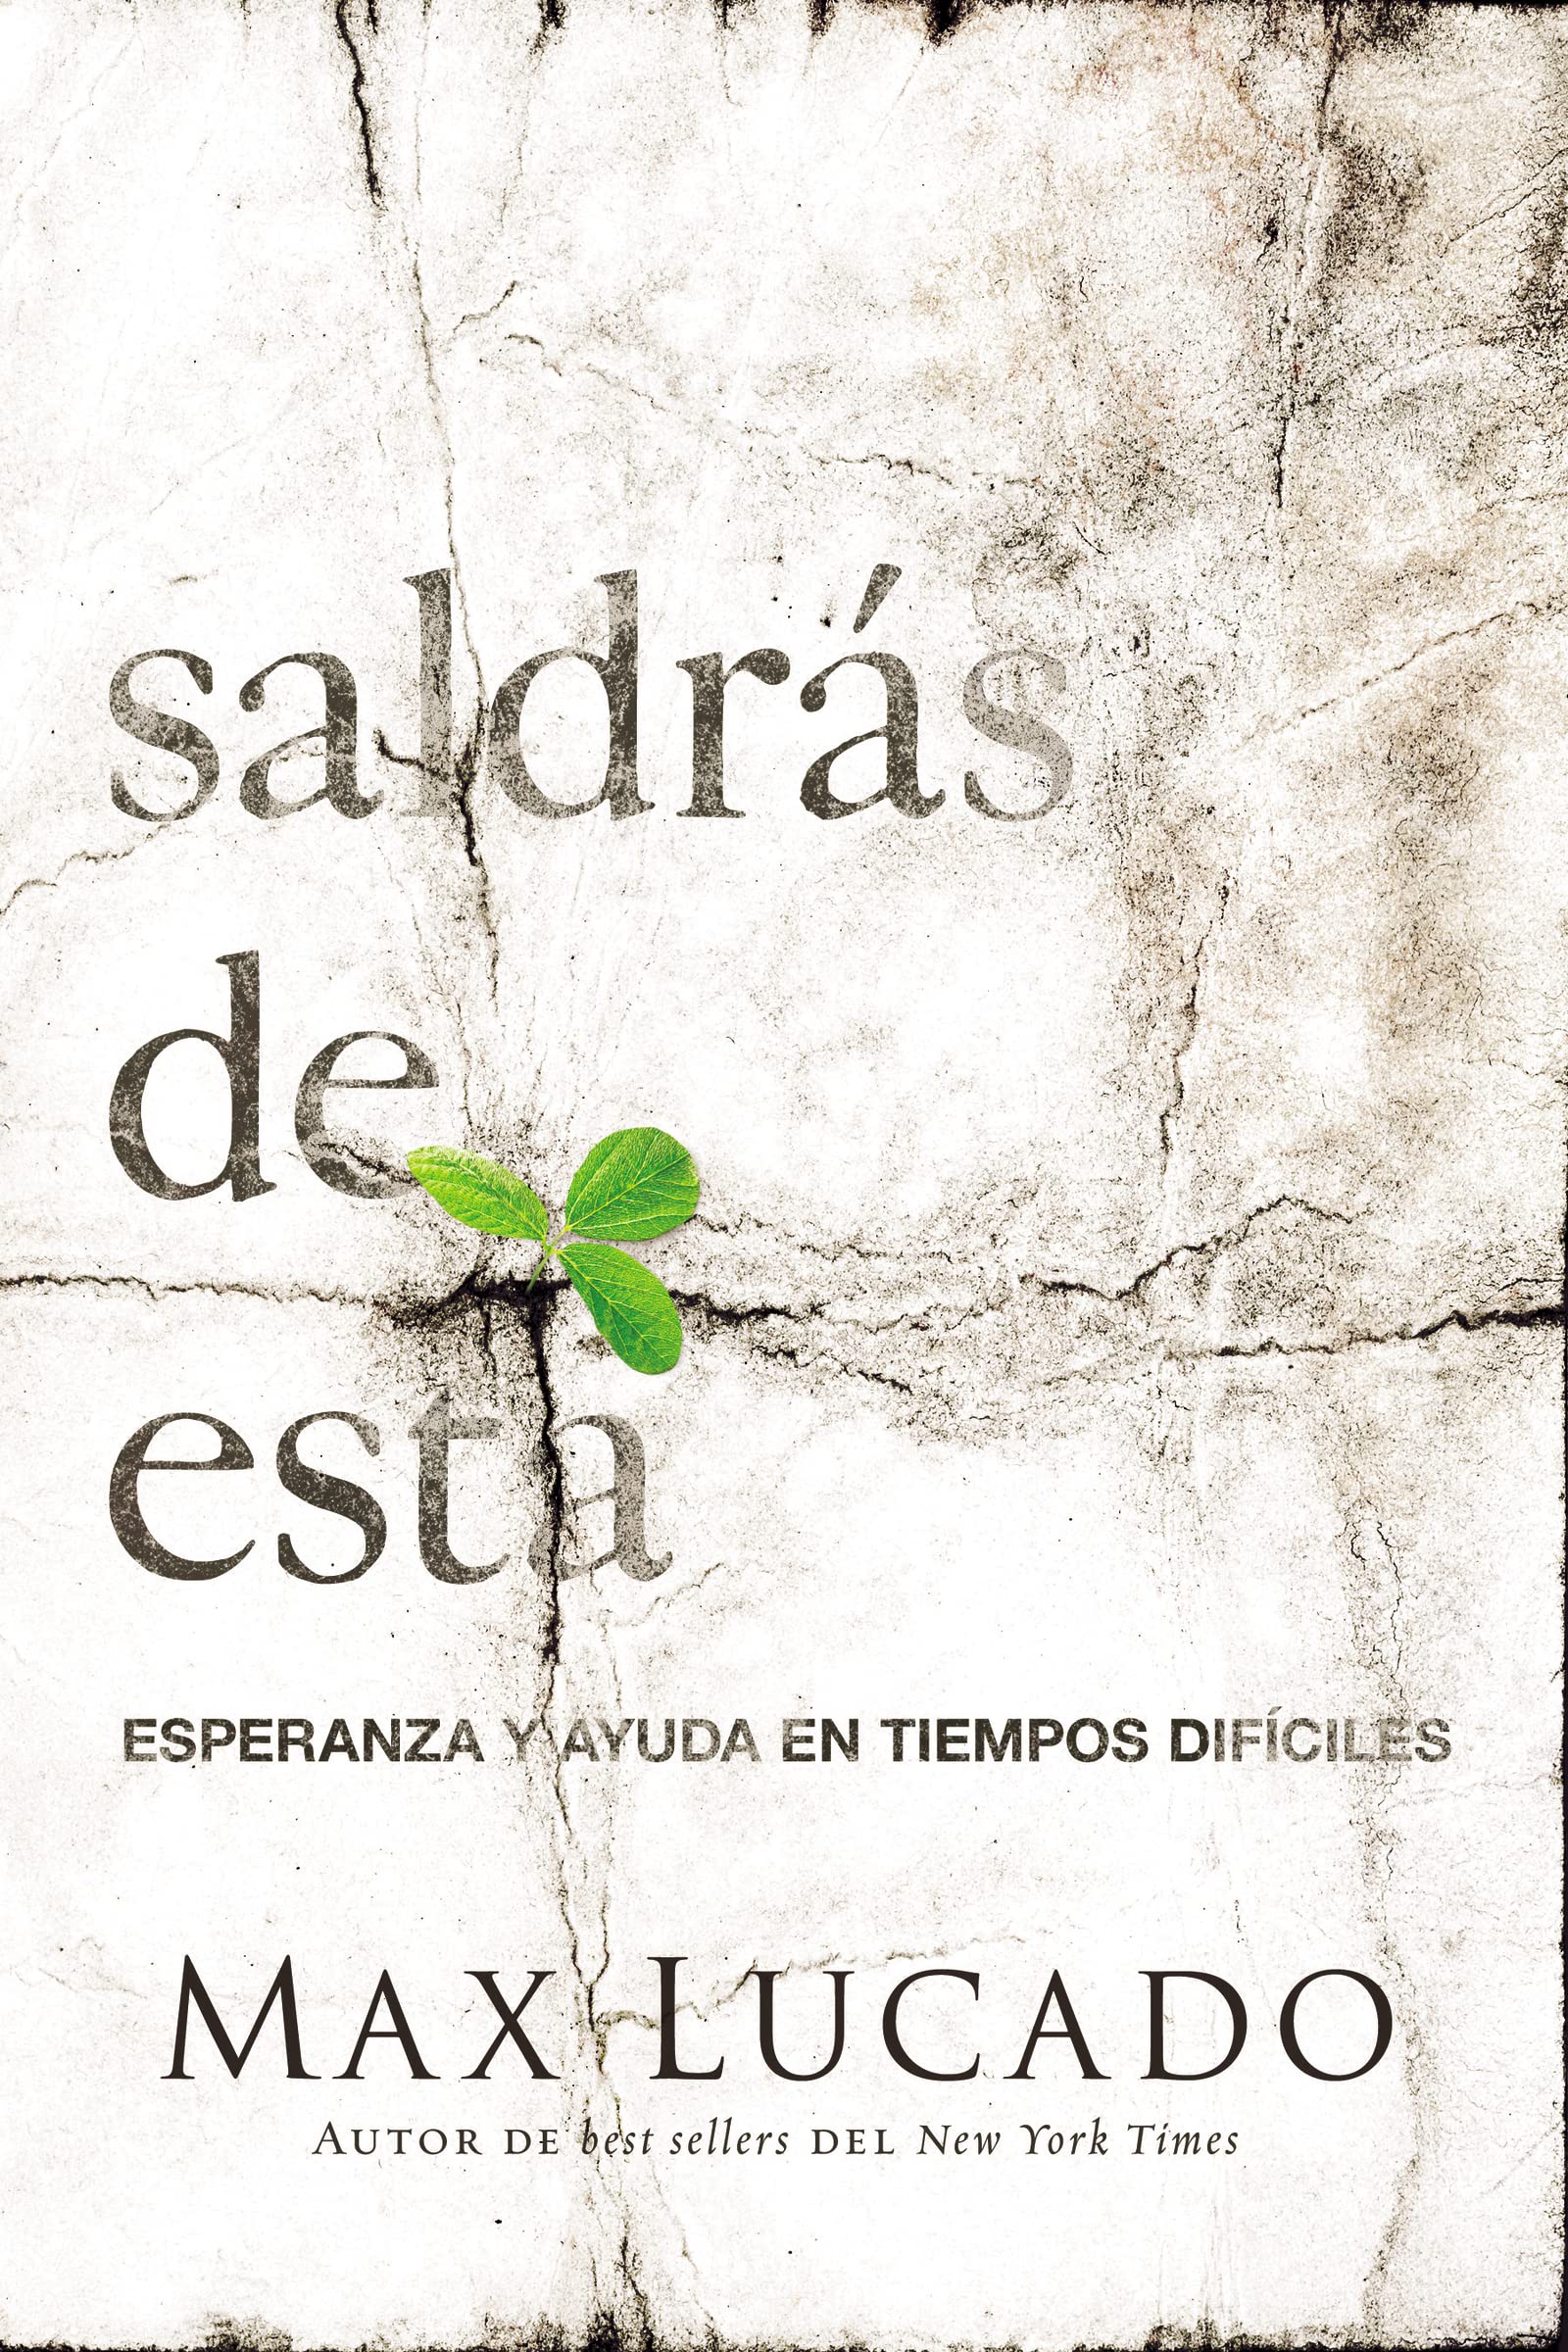 Saldras De Esta (Spanish Edition)